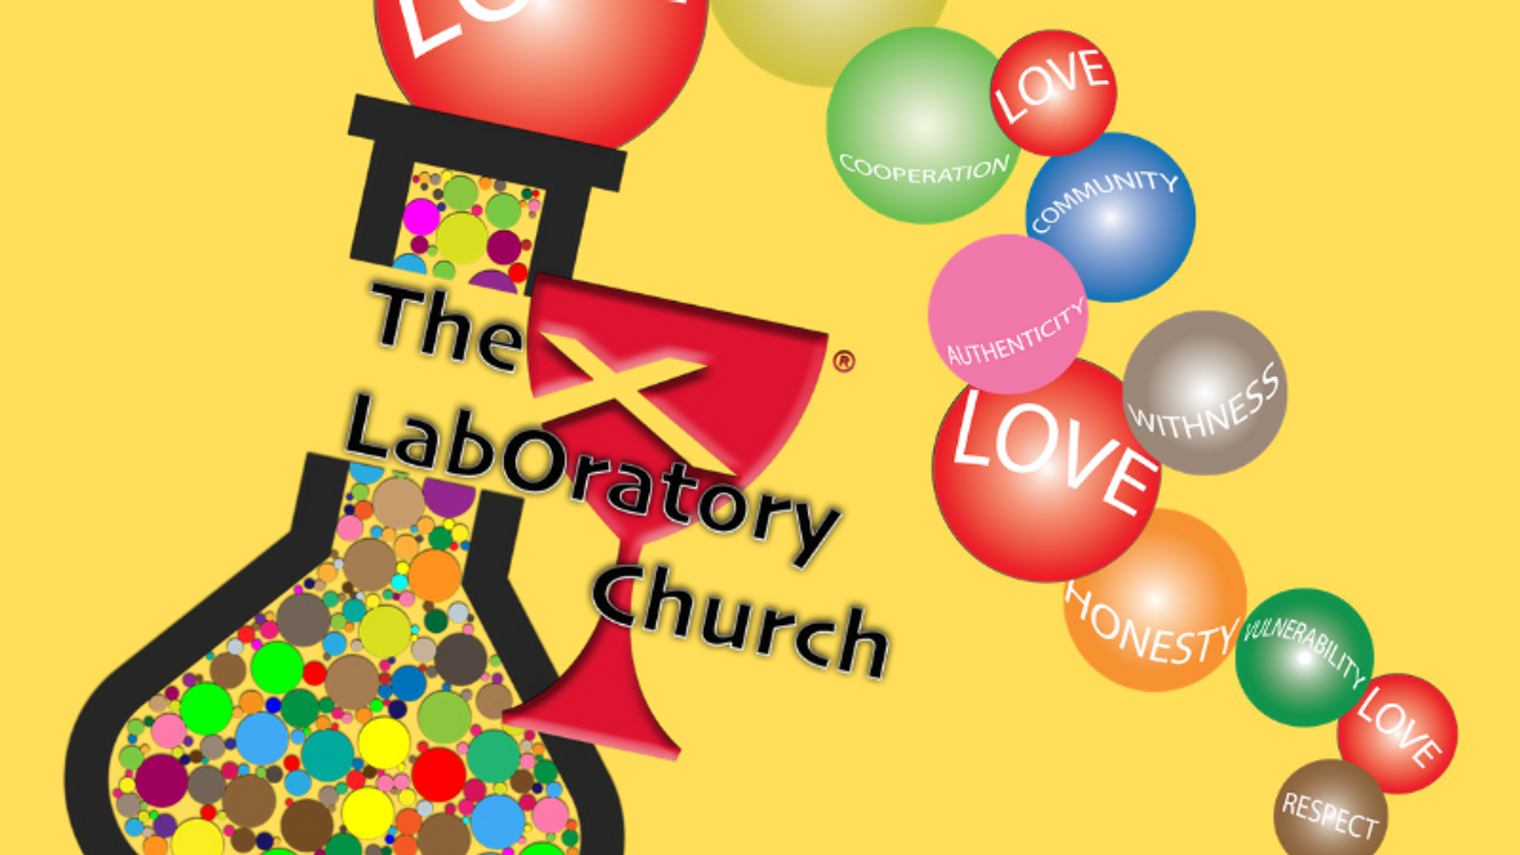 The LabOratory Church